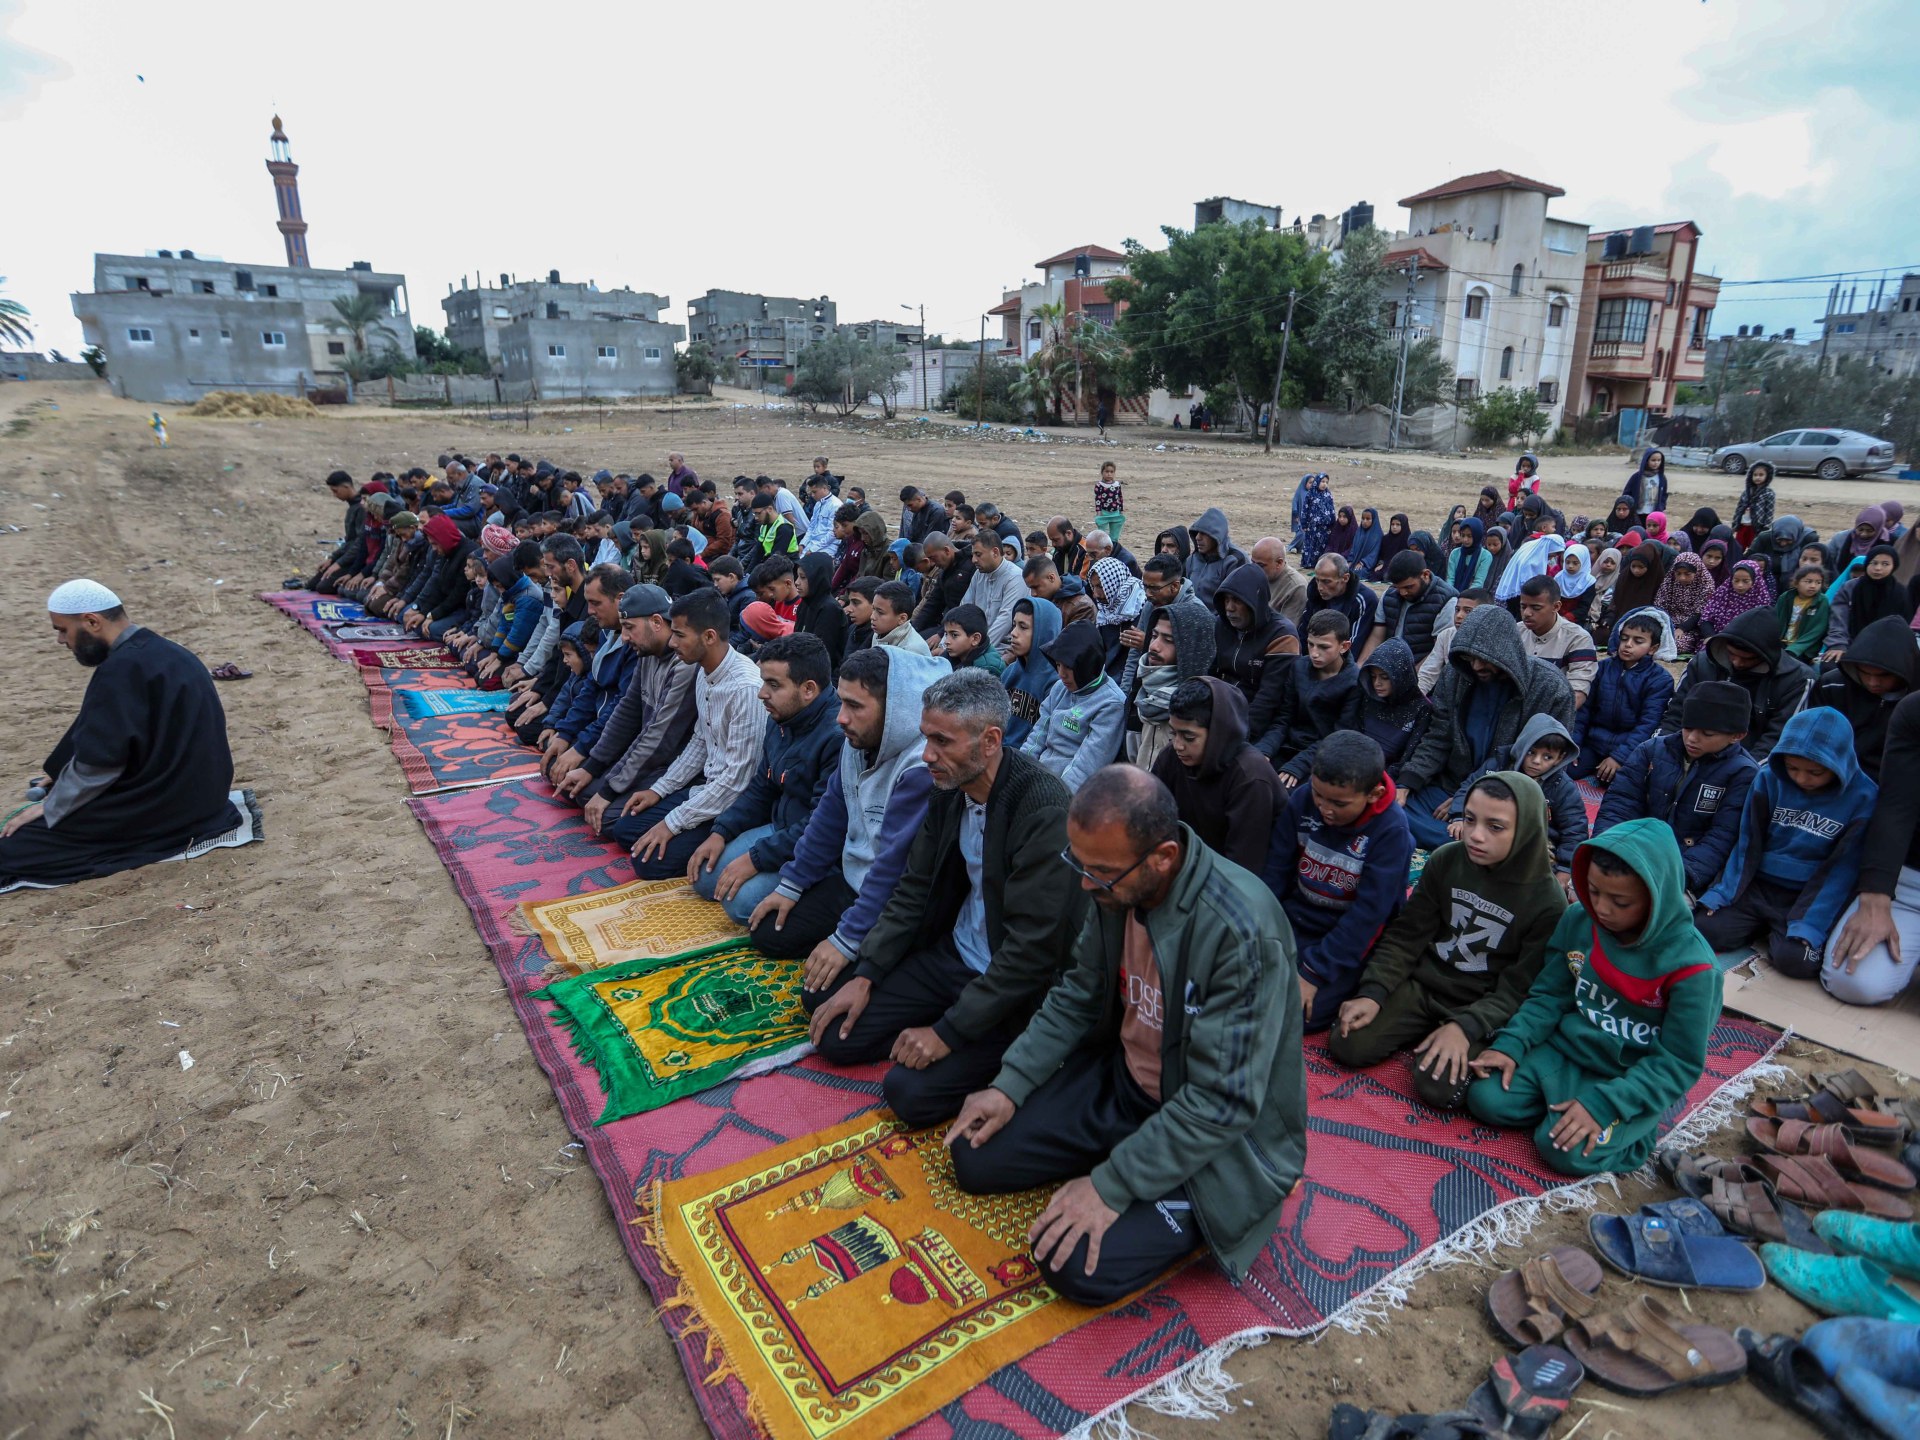 Eid prayers by Palestinians in Gaza and Jerusalems Al-Aqsa Mosque | Israel War on Gaza [Video]